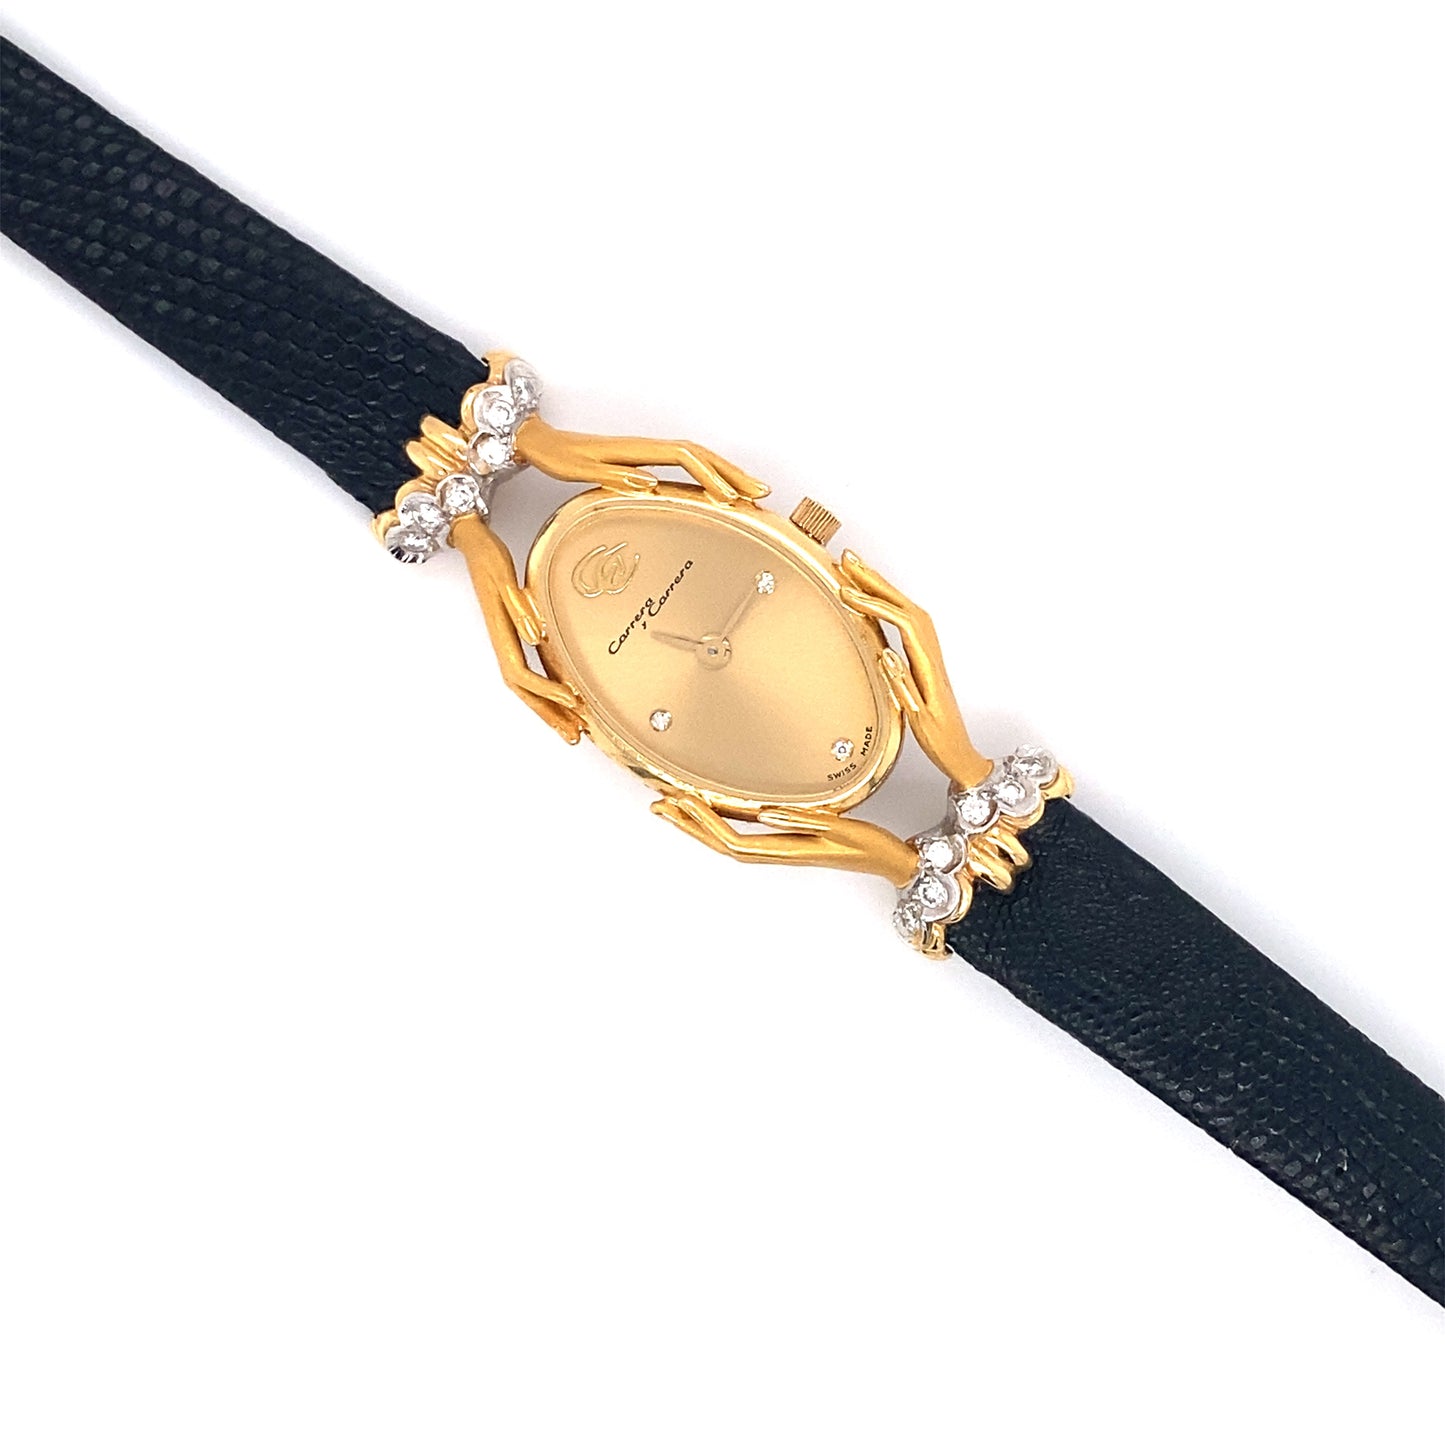 Carrera y Carrera Womens Wrist Watch with Lizard Band in 18K Gold